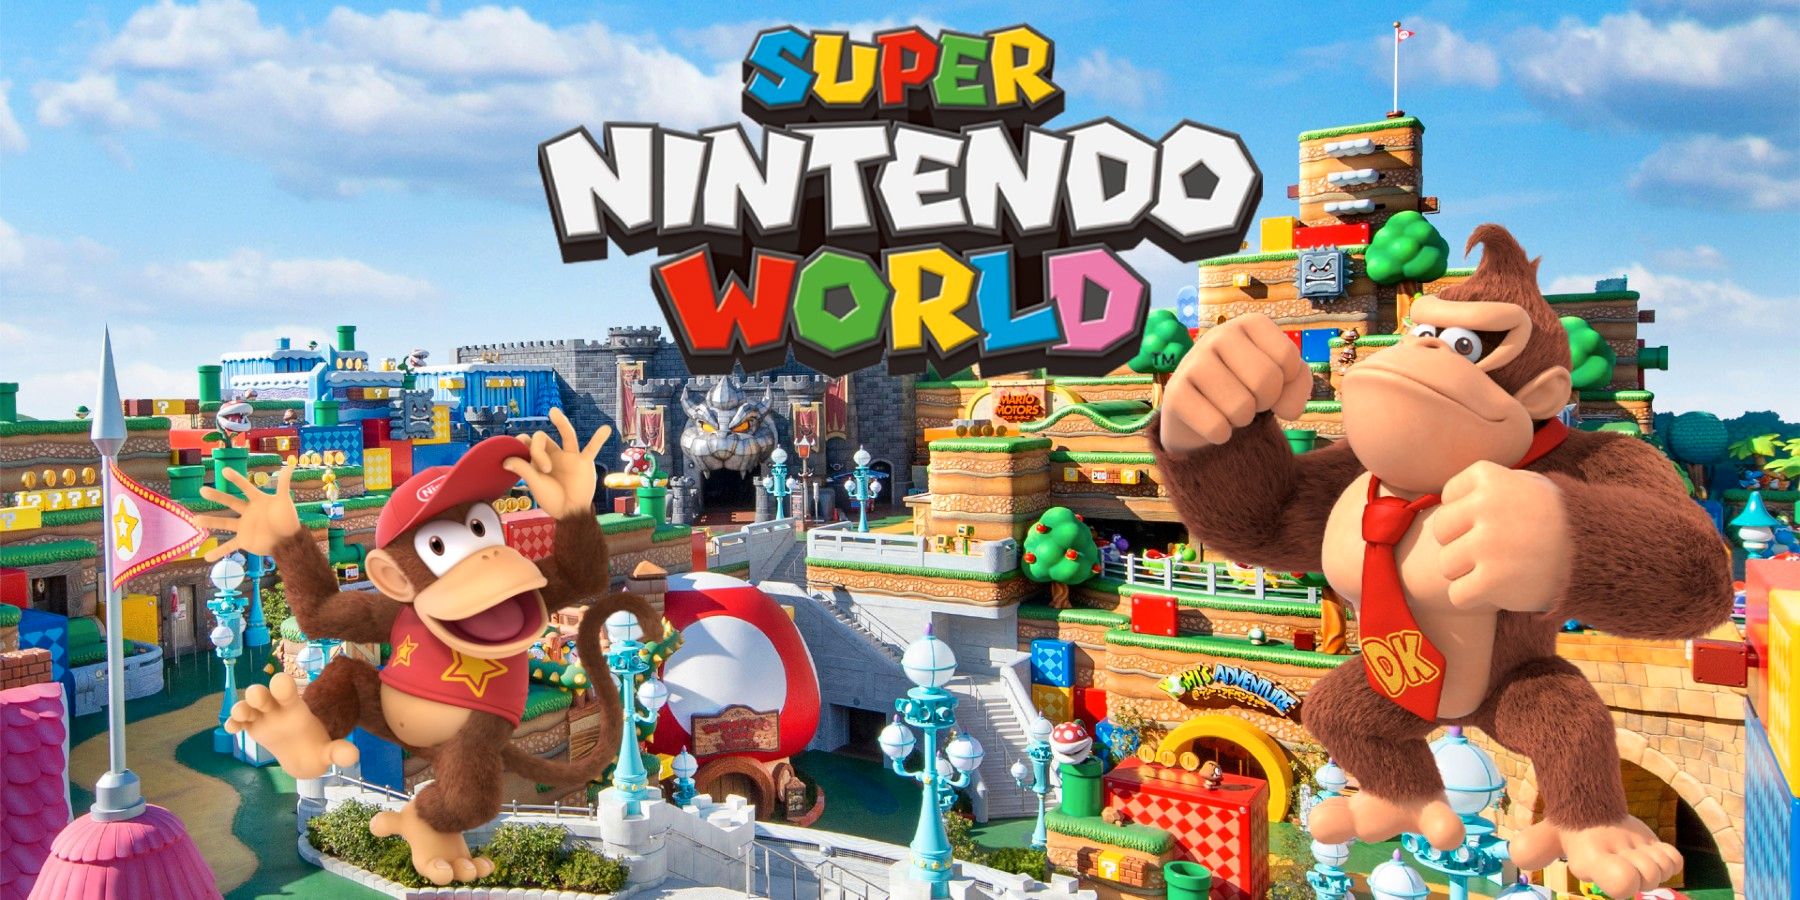 Super Nintendo World potvrdzuje expanziu Donkey Kong